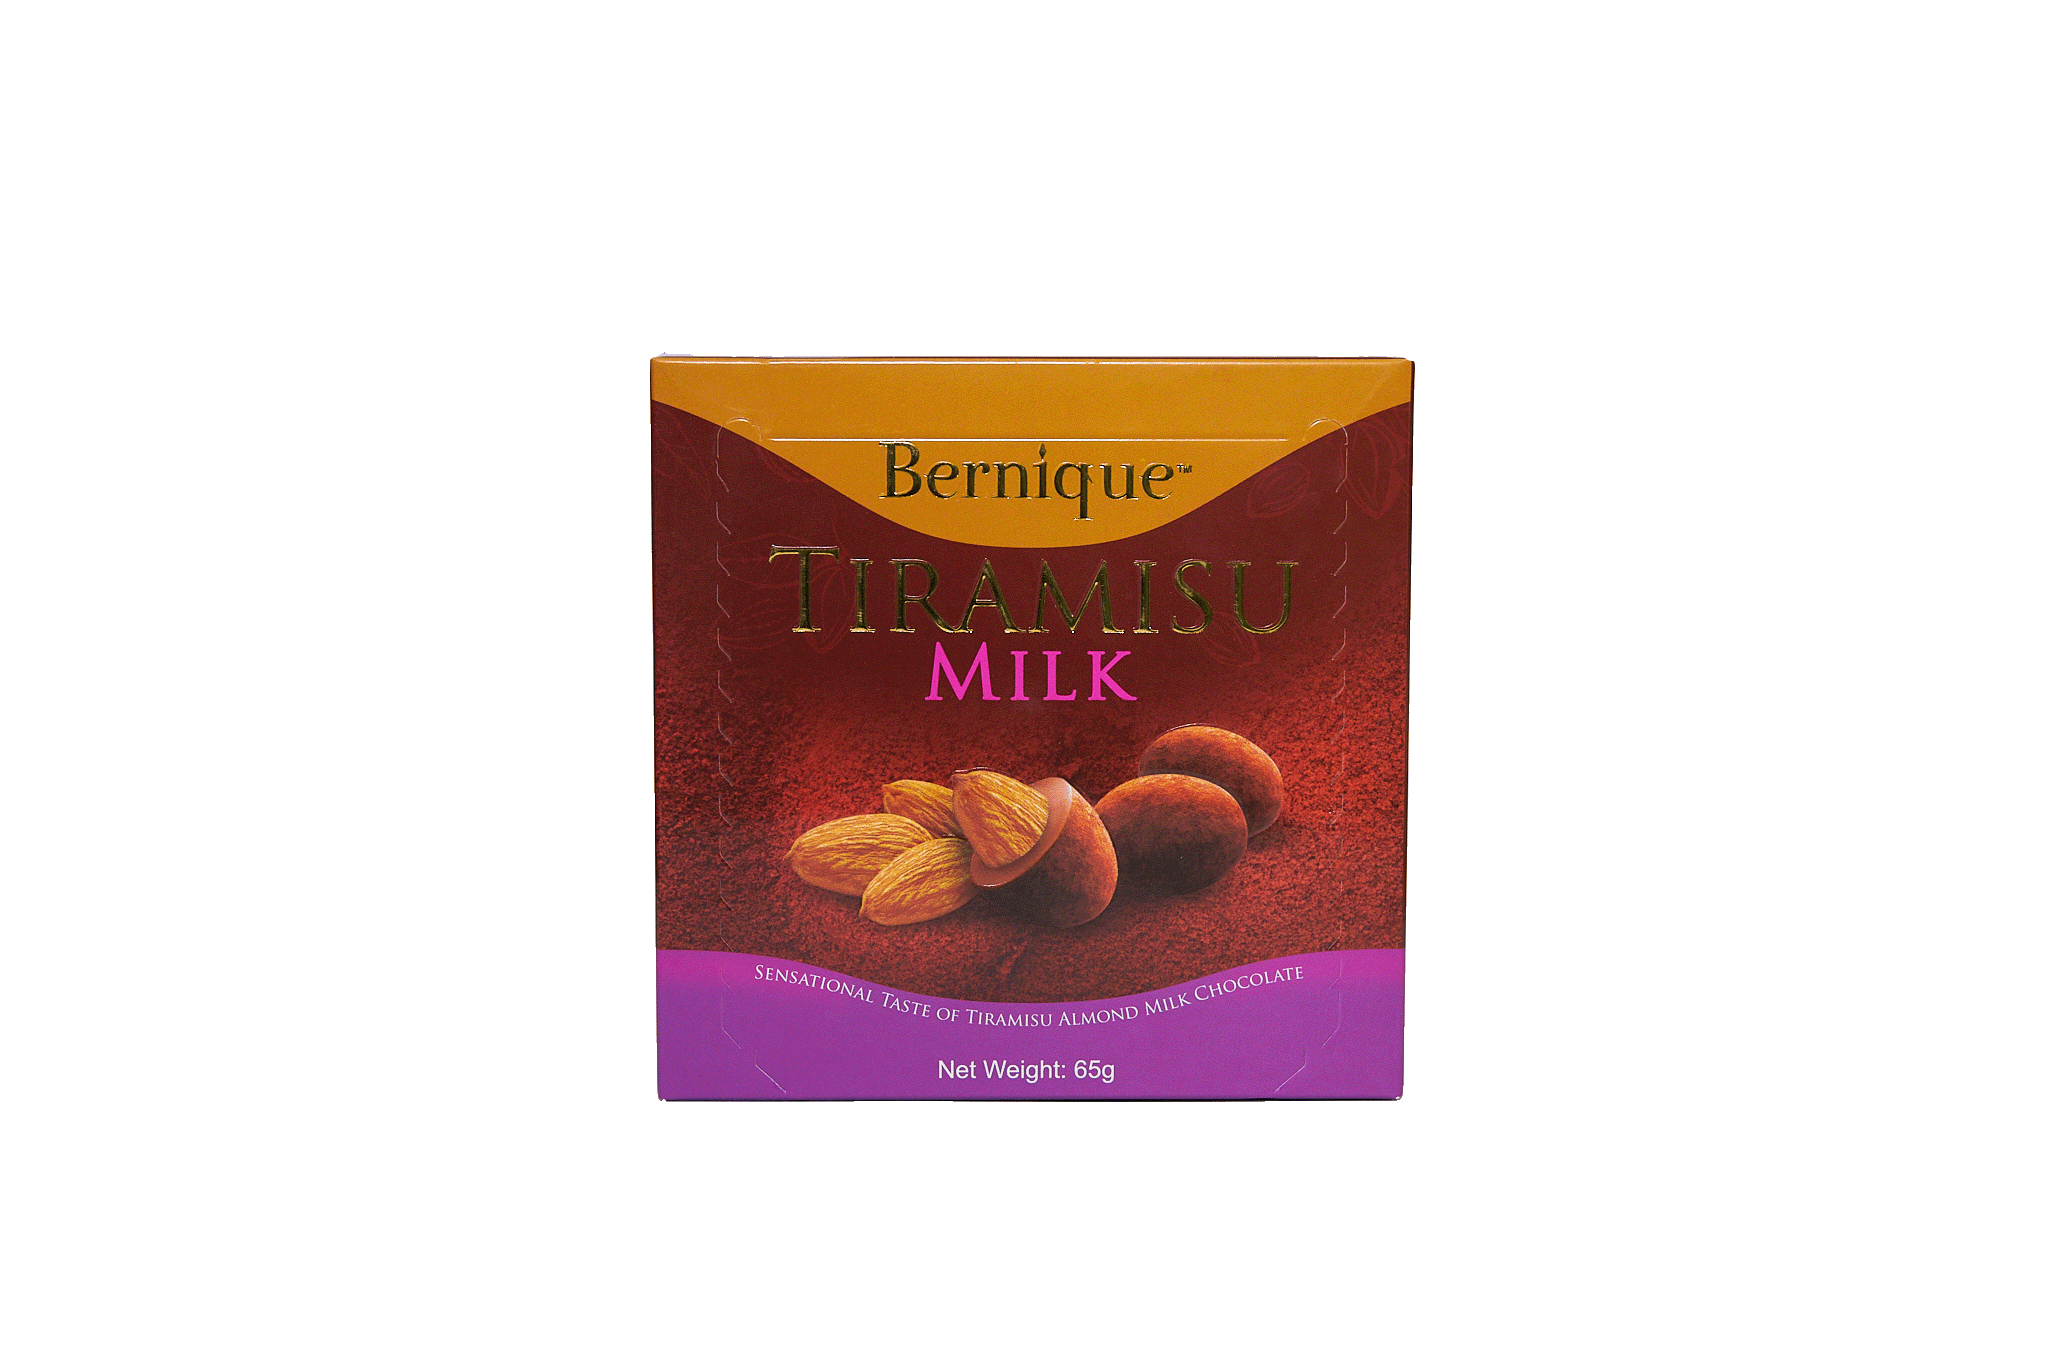 Chocolate Sữa Tiramisu Hạnh Nhân Bernique Malaysia- Chocolate Tiramisu Almond Milk Bernique 65g/1box